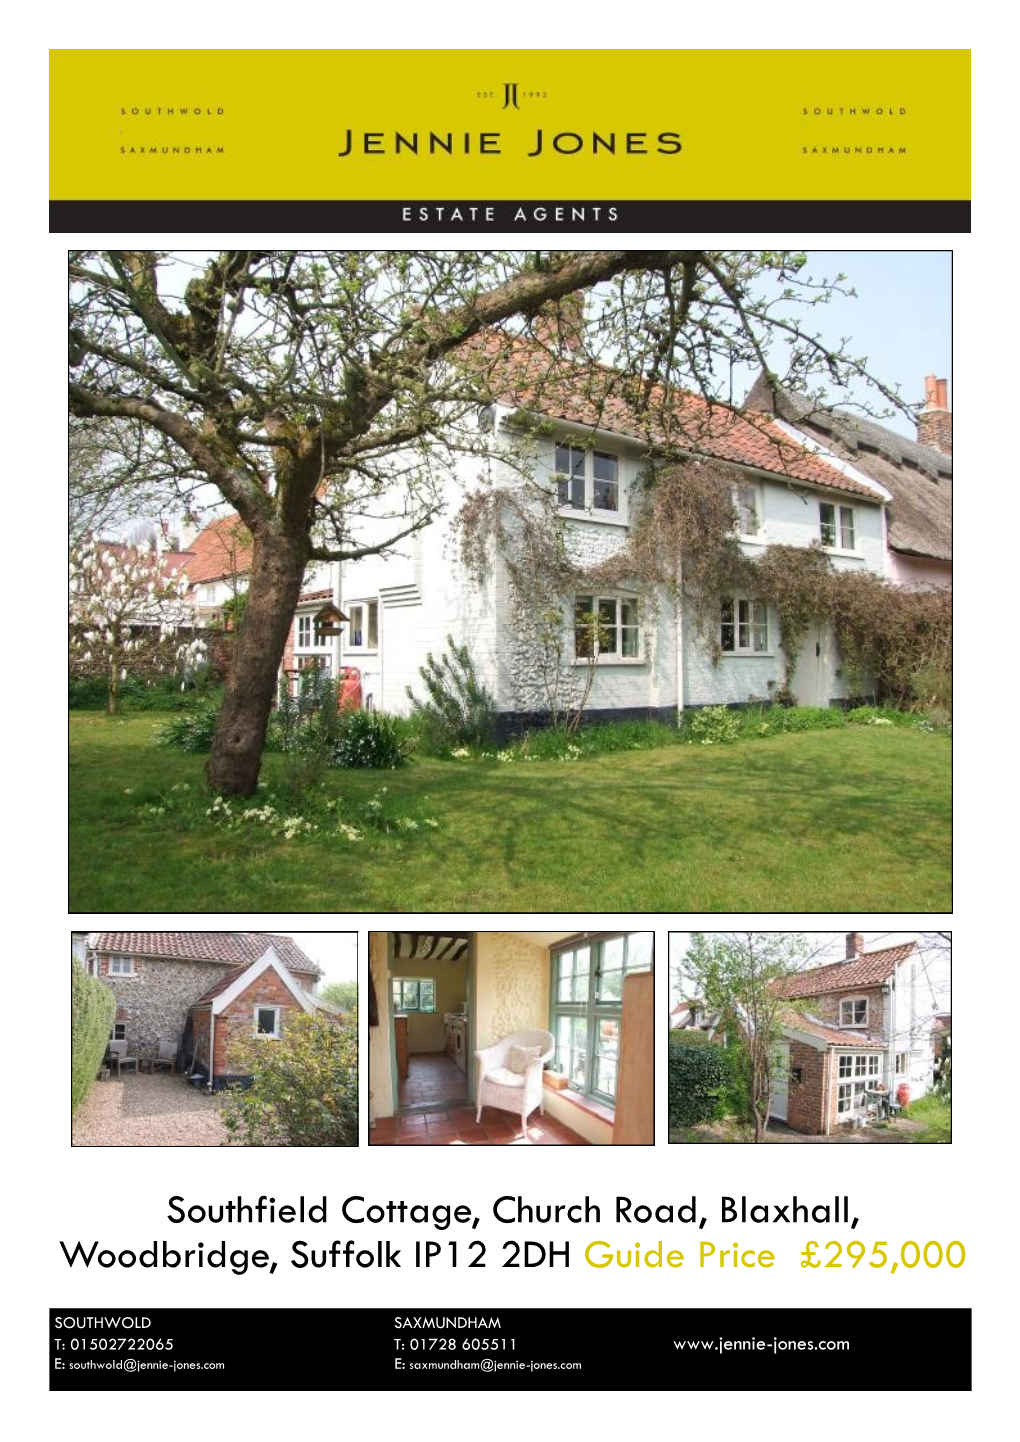 Southfield Cottage, Church Road, Blaxhall, Woodbridge, Suffolk IP12 2DH Guide Price £295,000